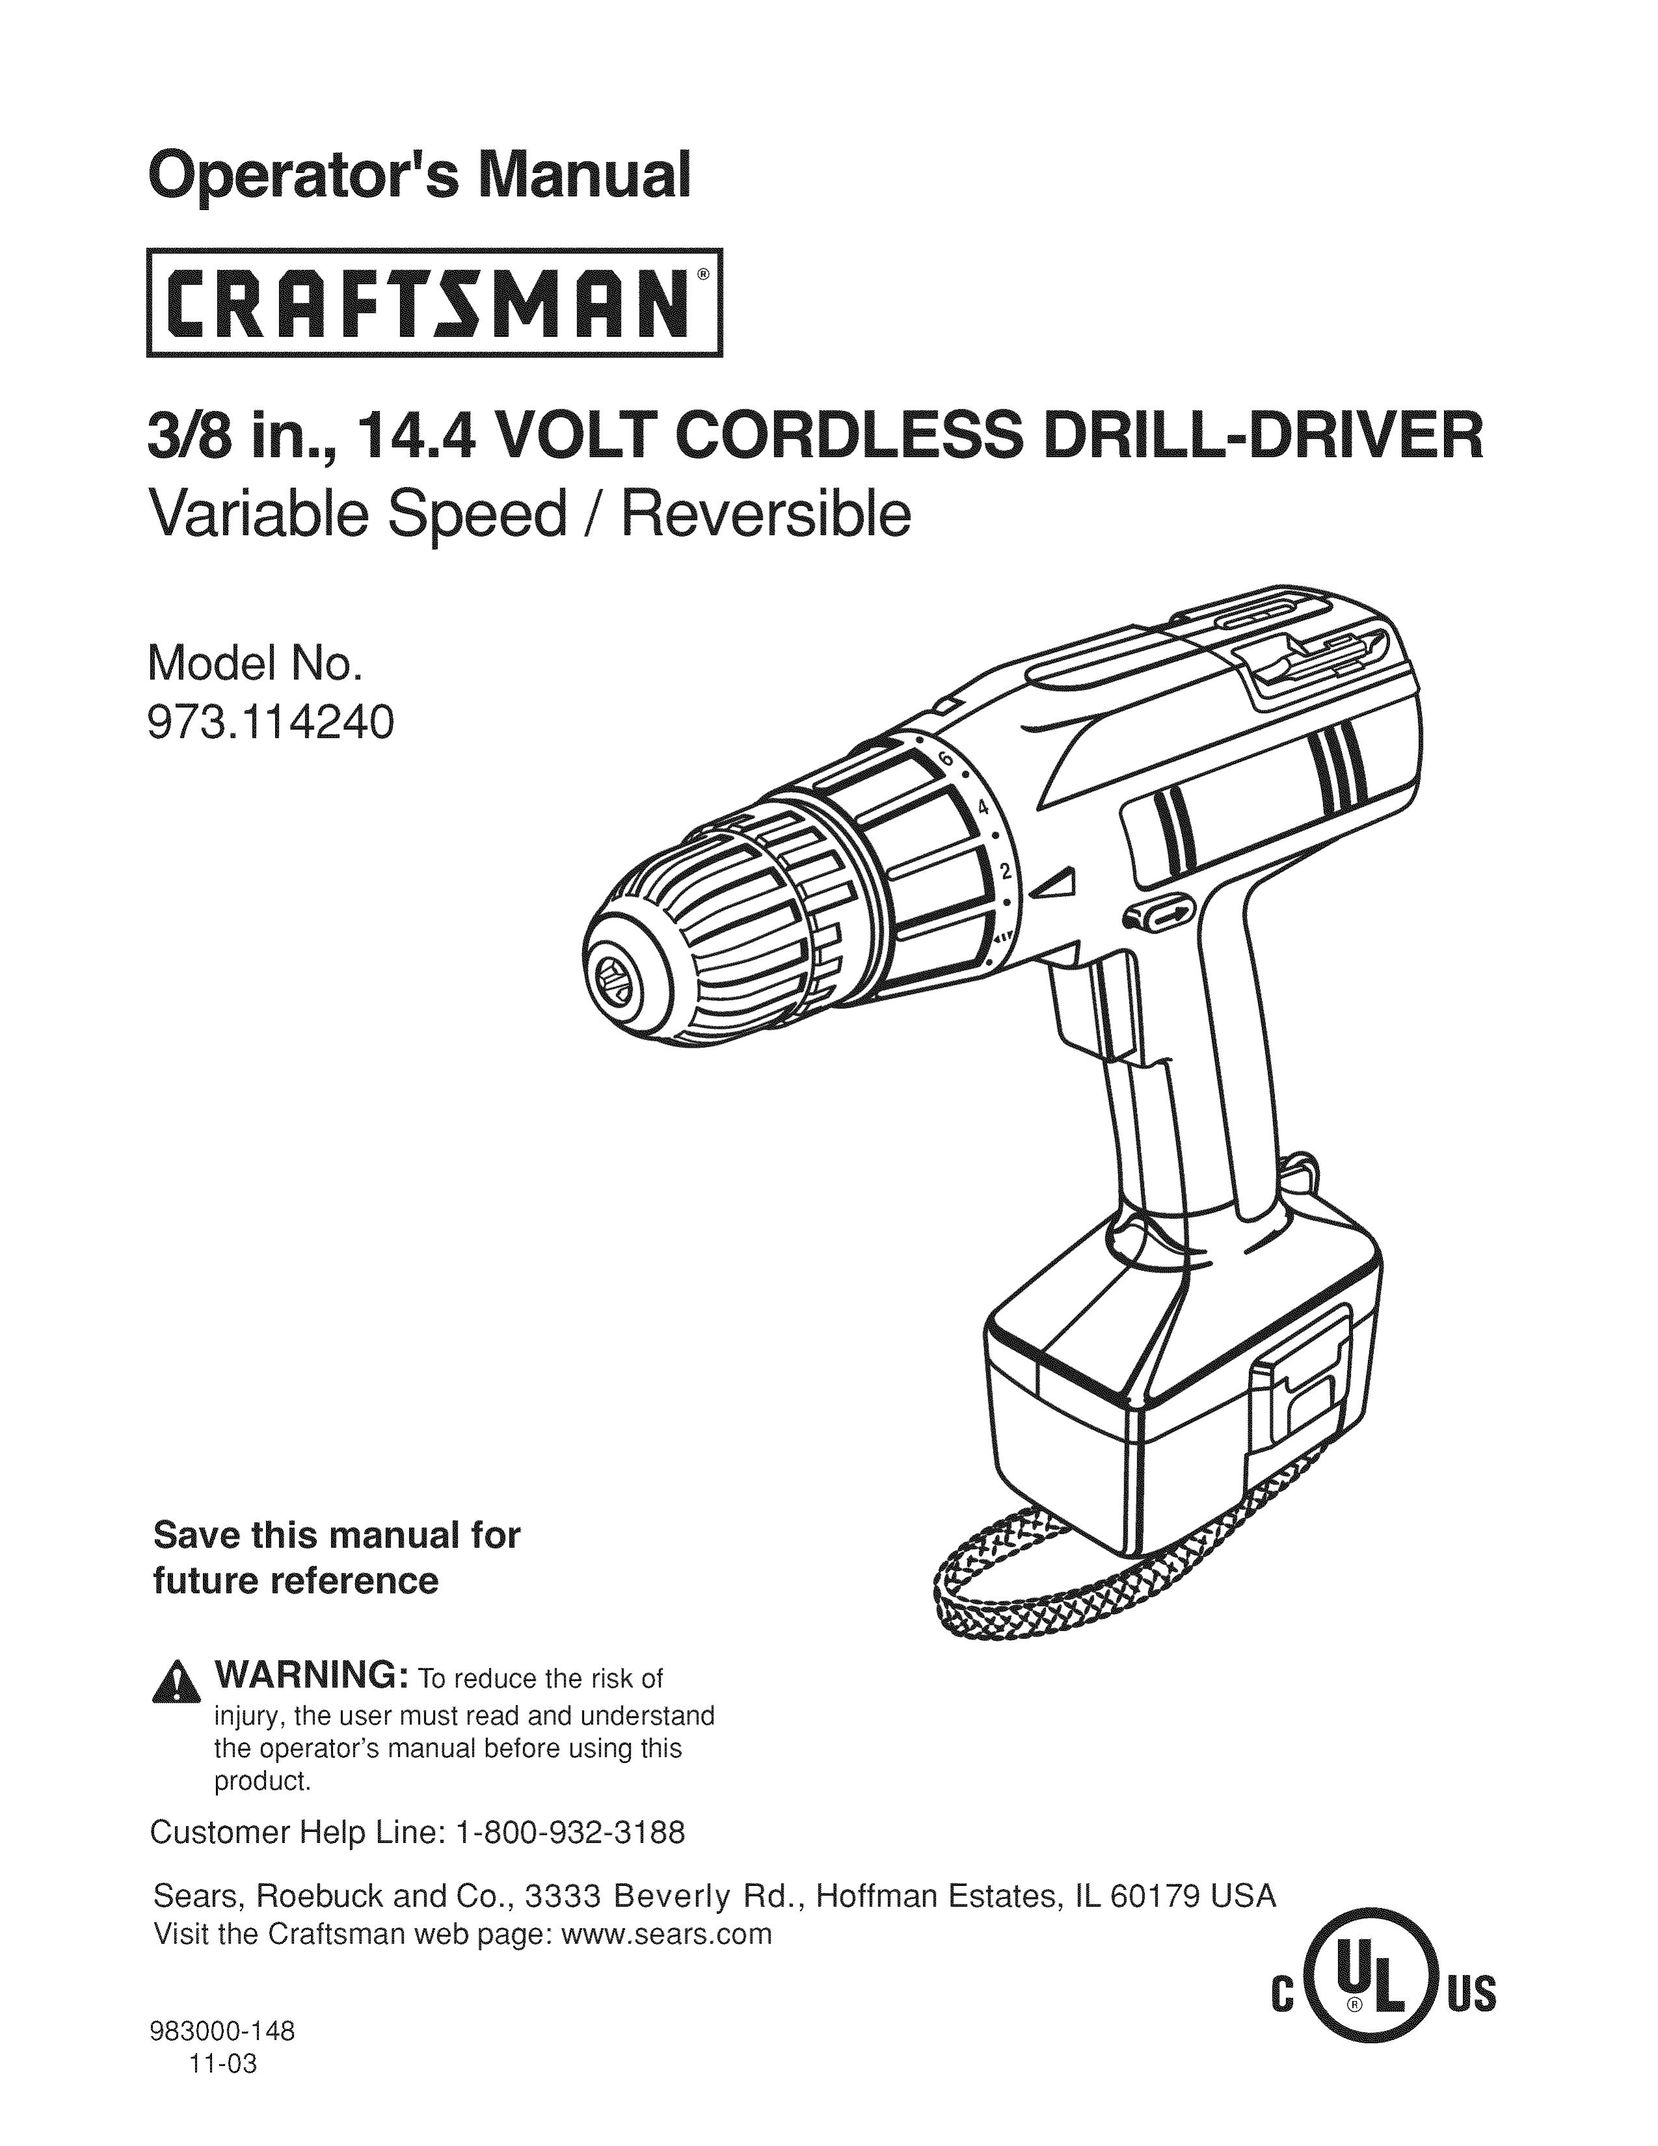 Craftsman 973.11424 Cordless Drill User Manual